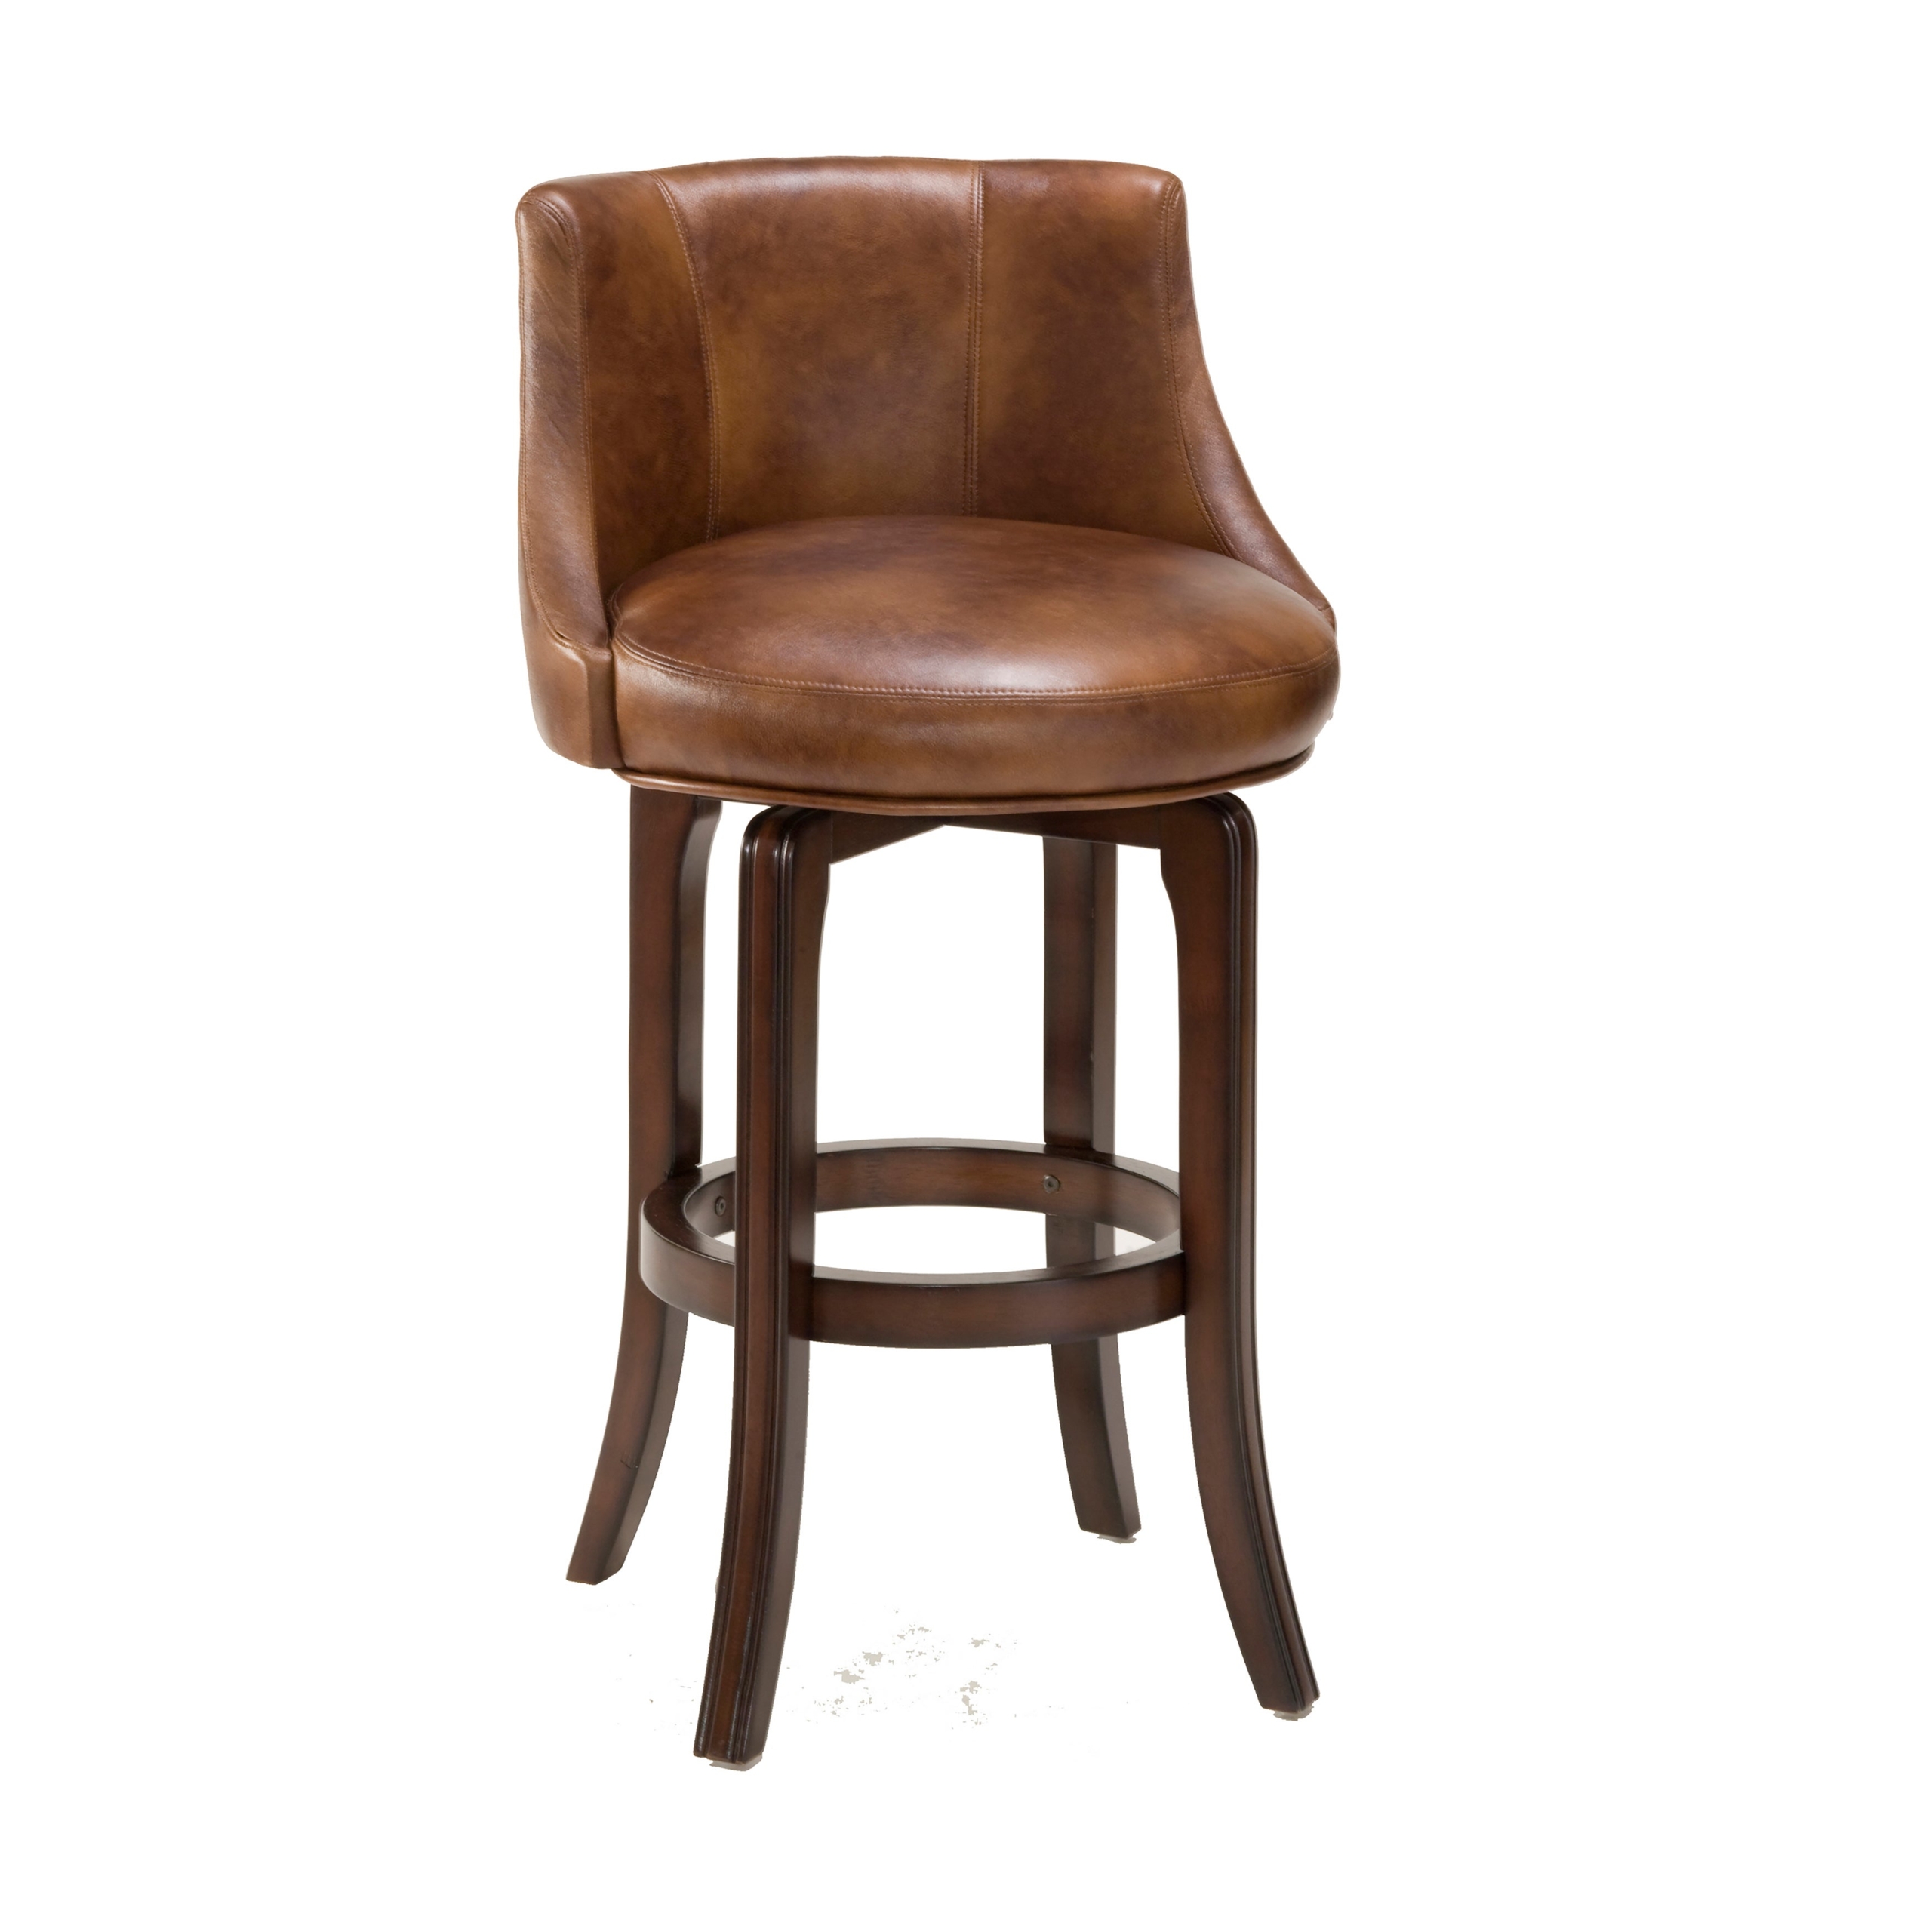 Solid wood swivel bar stools 1